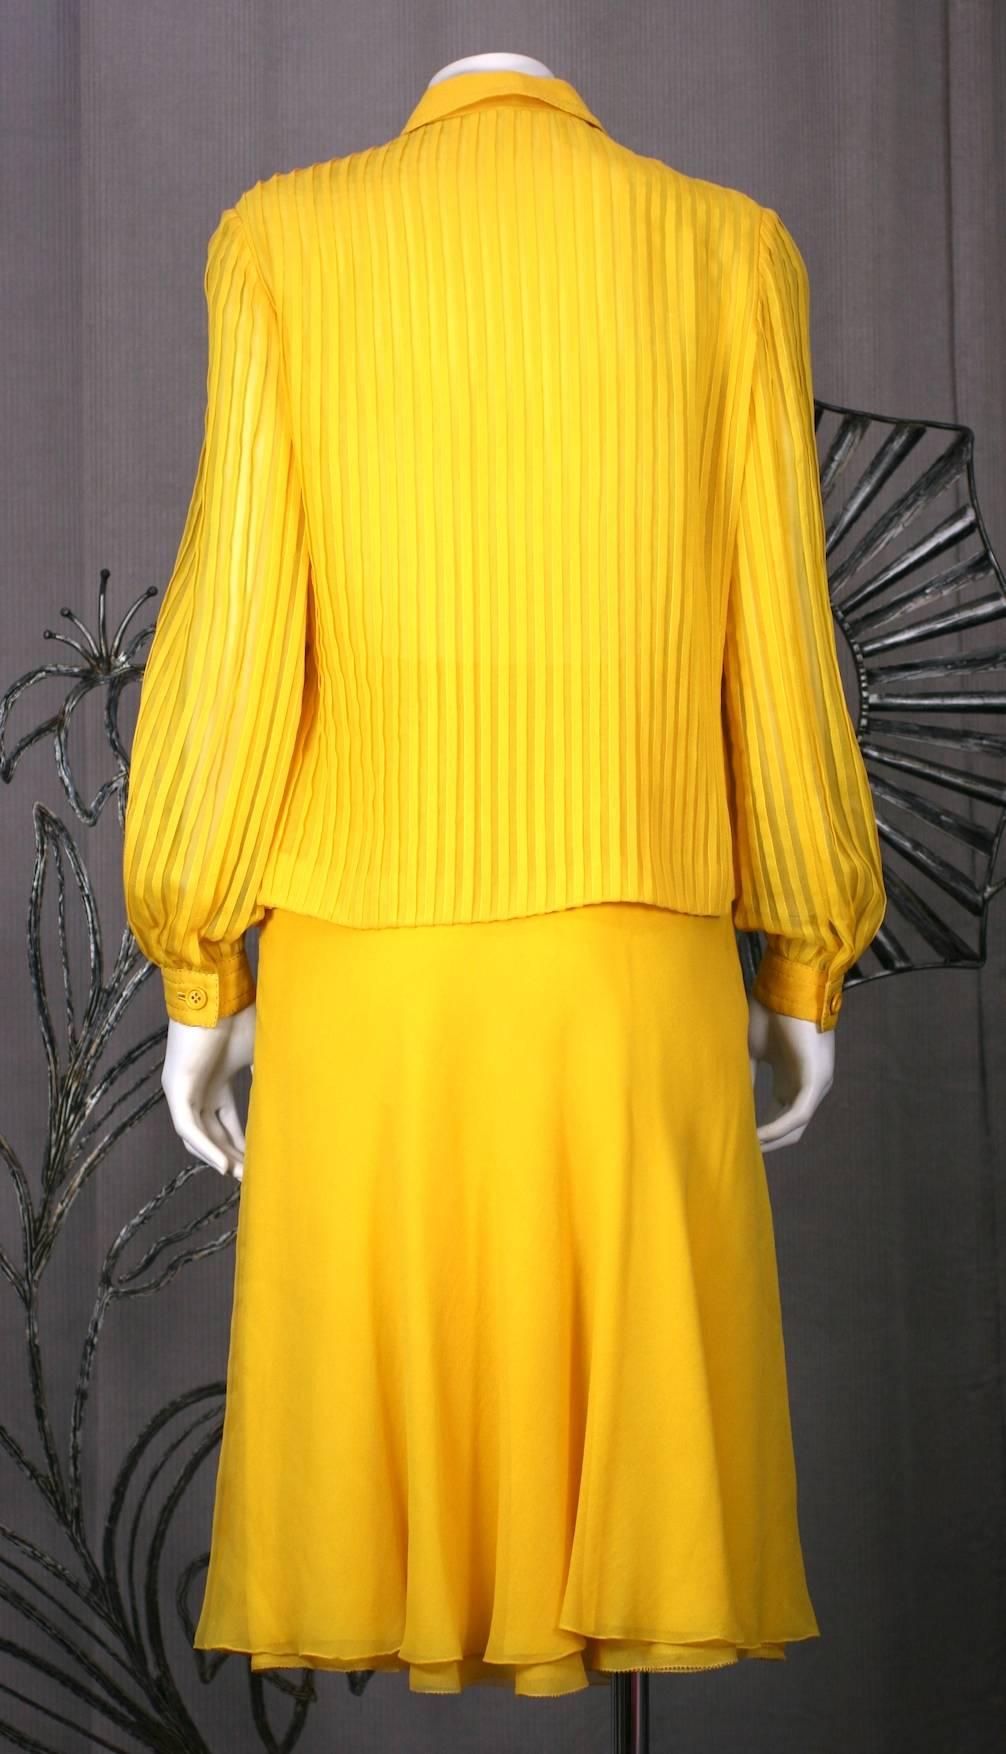 Women's Galanos Charming Chrome Yellow Chiffon Skirt Ensemble For Sale